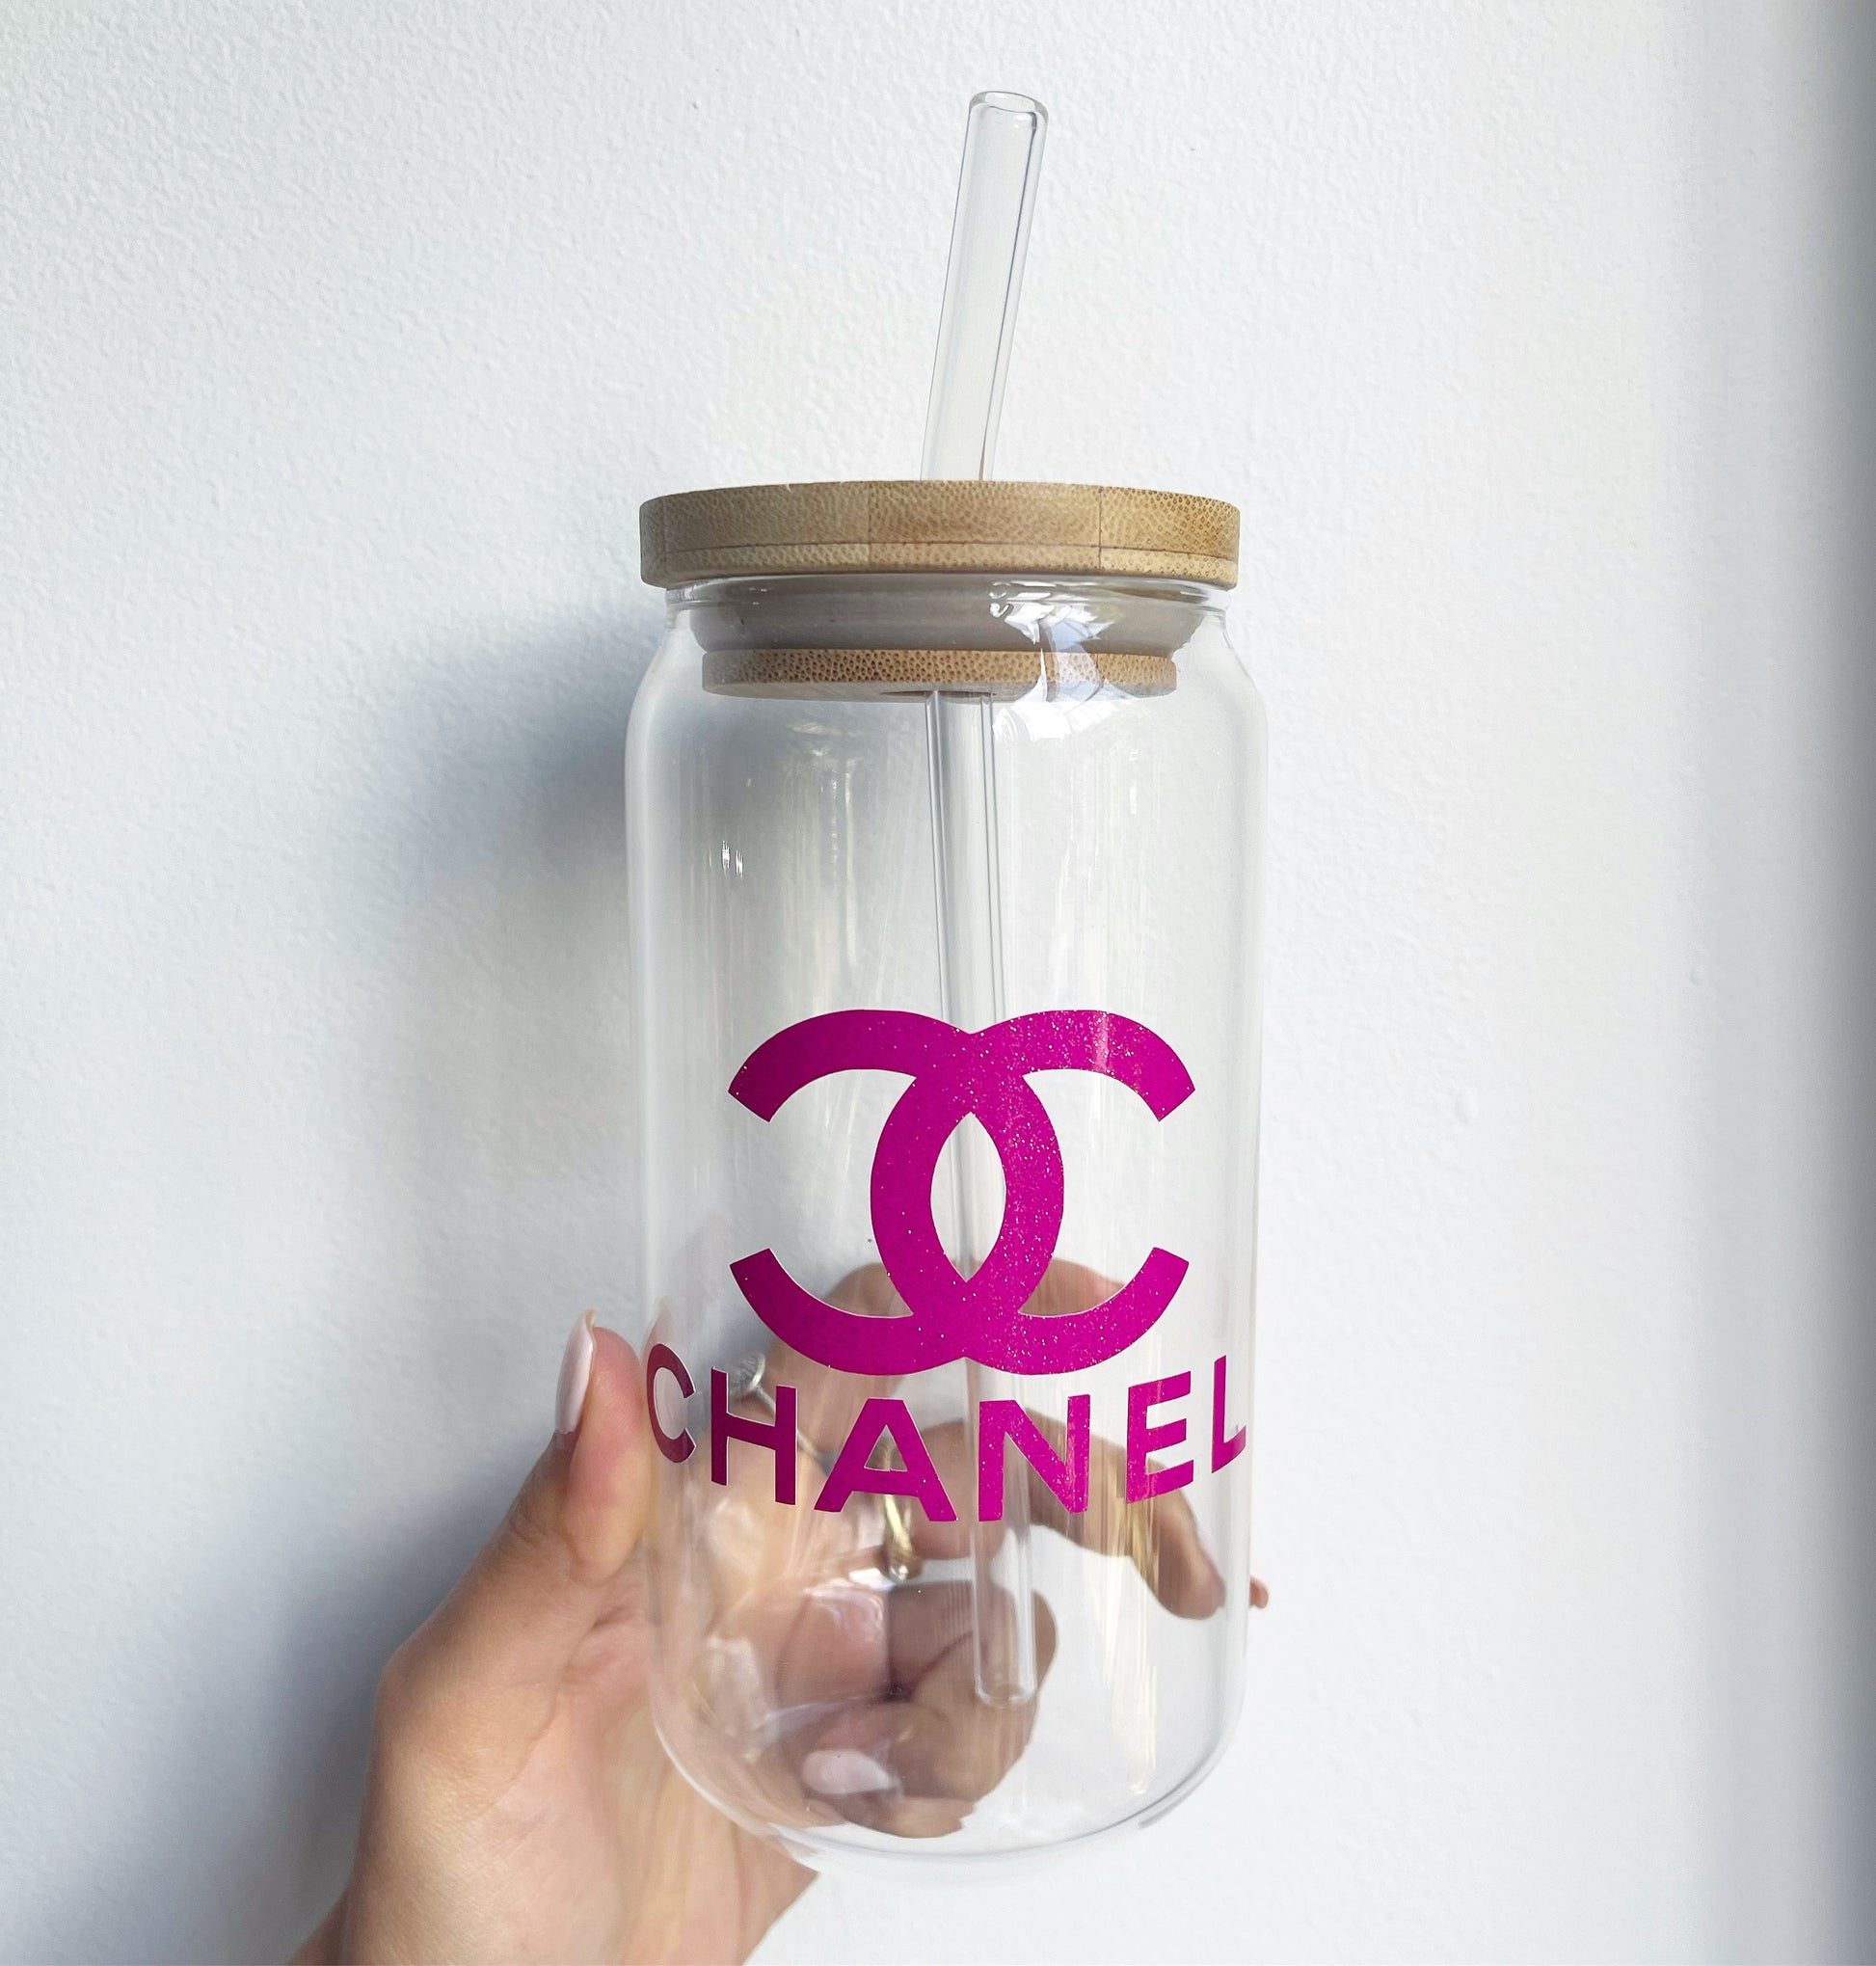 Chanel Luxury Water Bottle Sells For $5,000